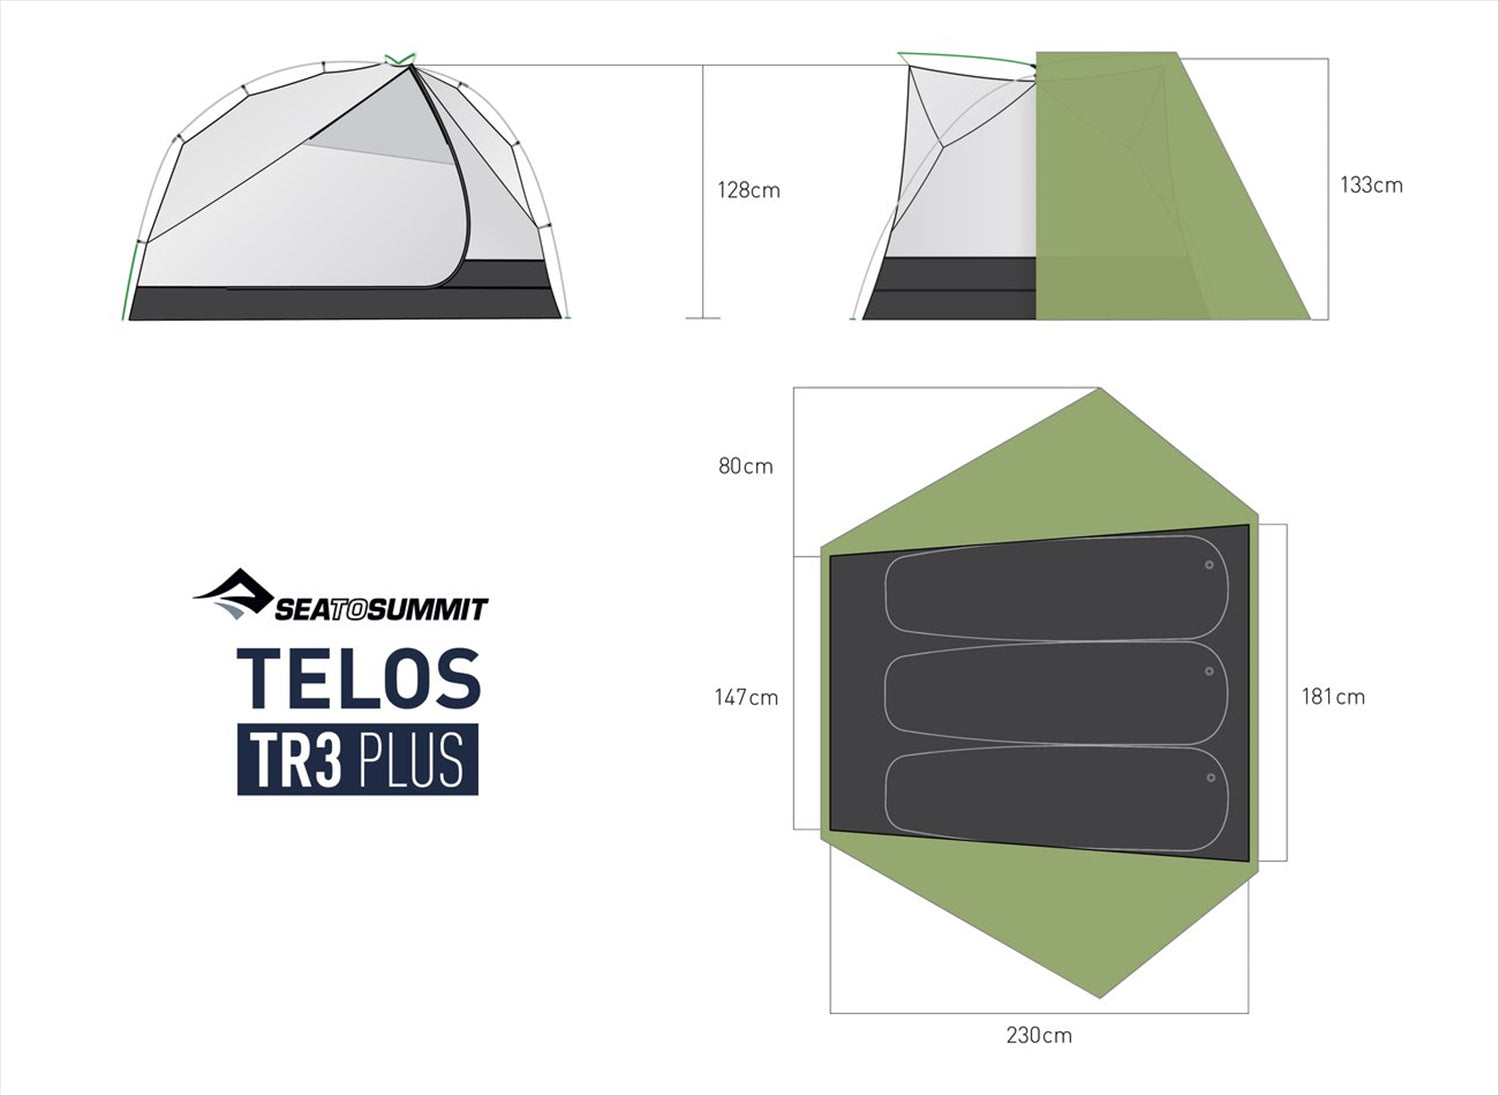 Sea To Summit Telos TR3 Plus 3 Person Ultralight Tent 2.23kg